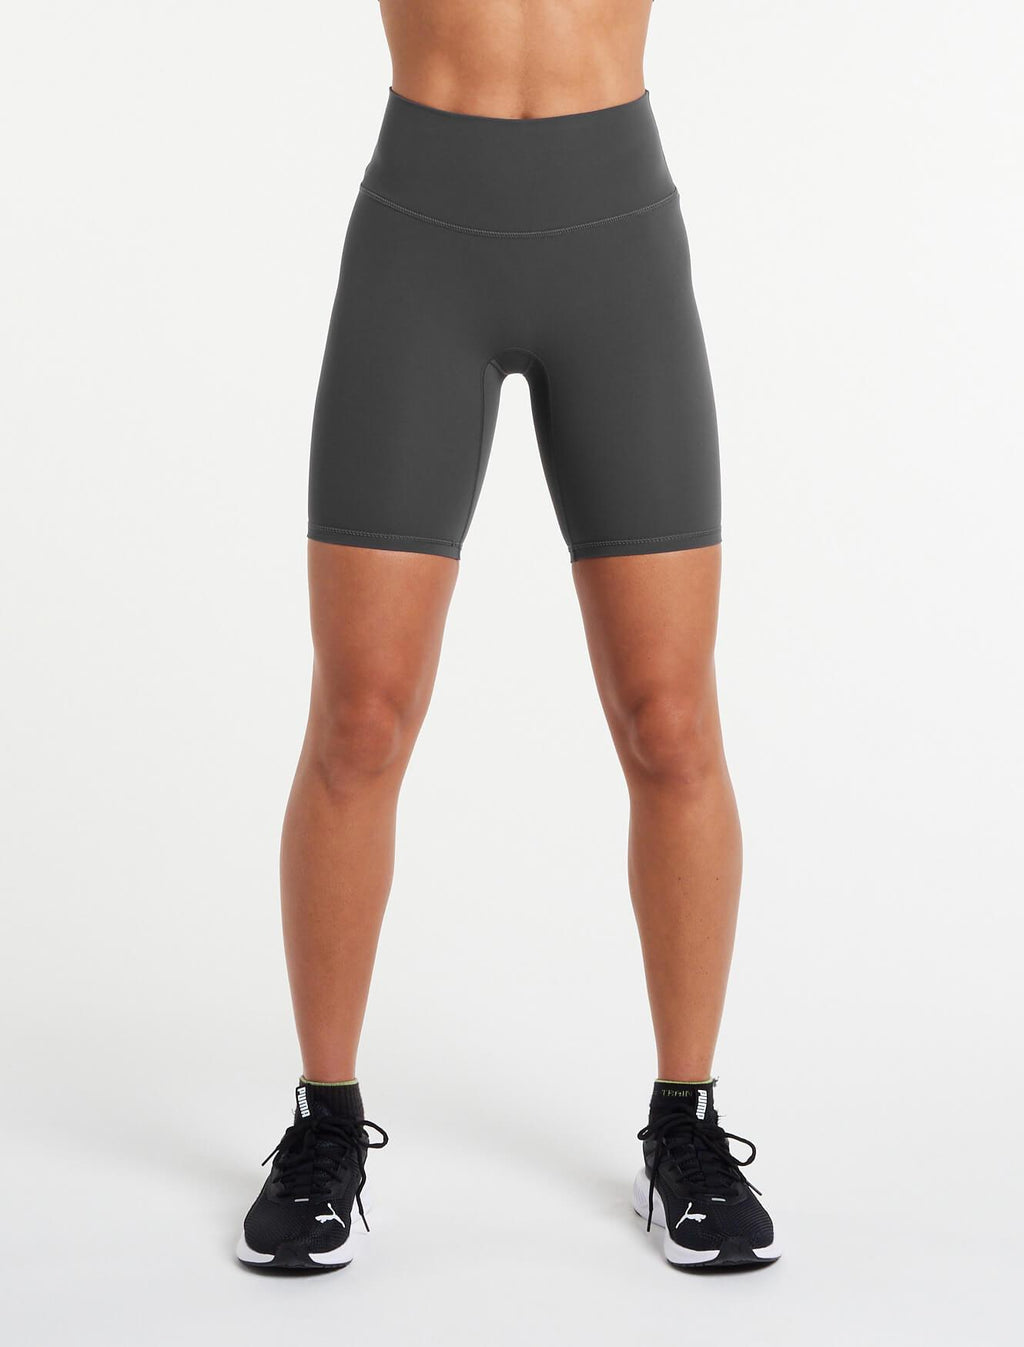 products/womens-pace-biker-shorts-slate-grey.jpg